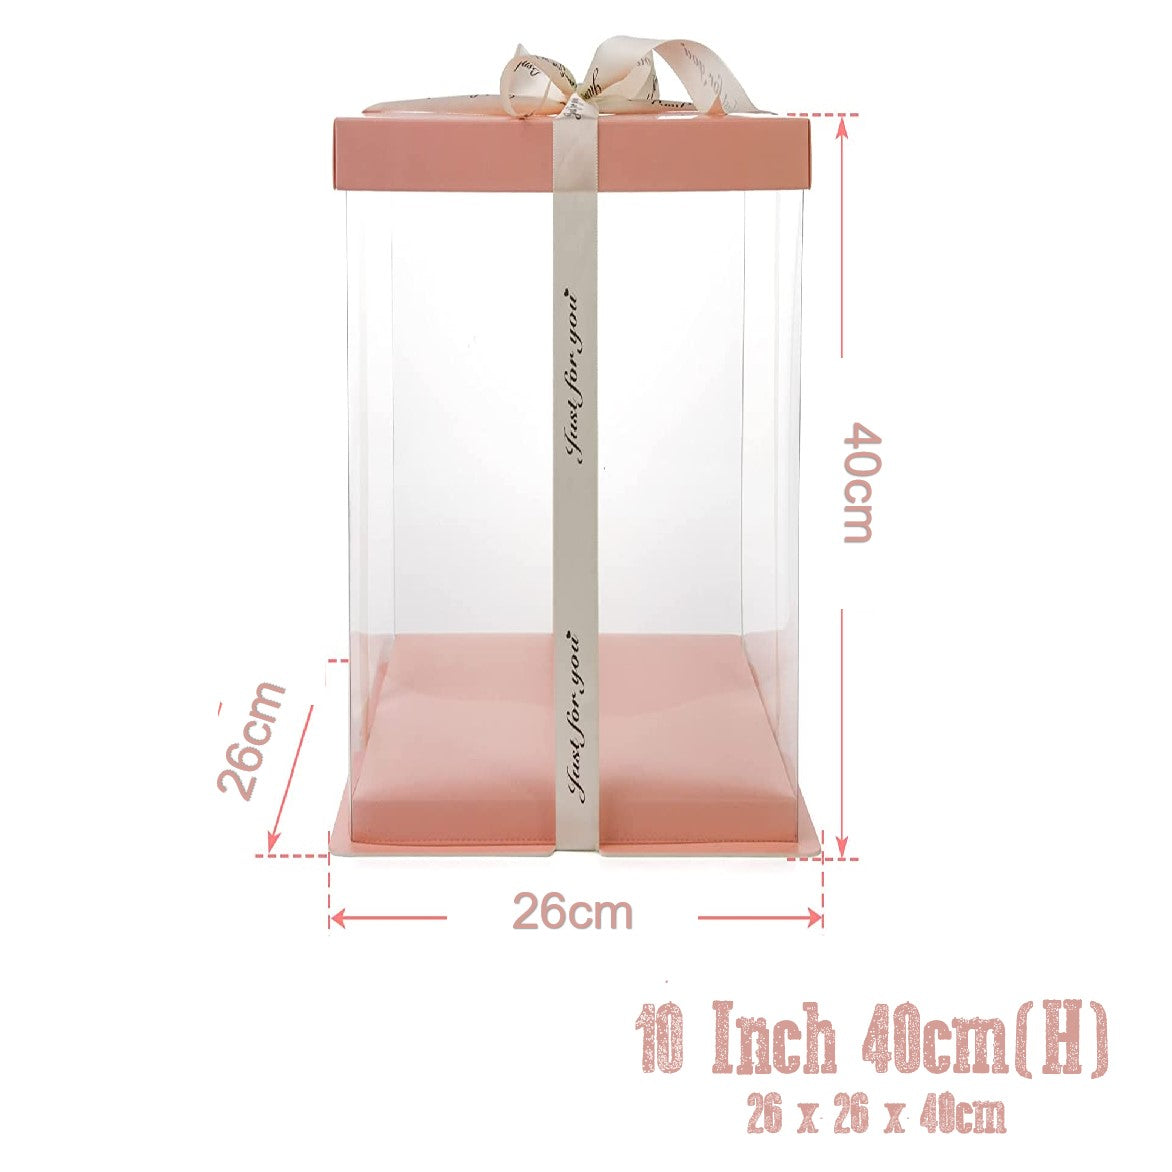 Cake Packaging - Elegant 10 Inch Cake Box Packaging 40cm Height - Pink